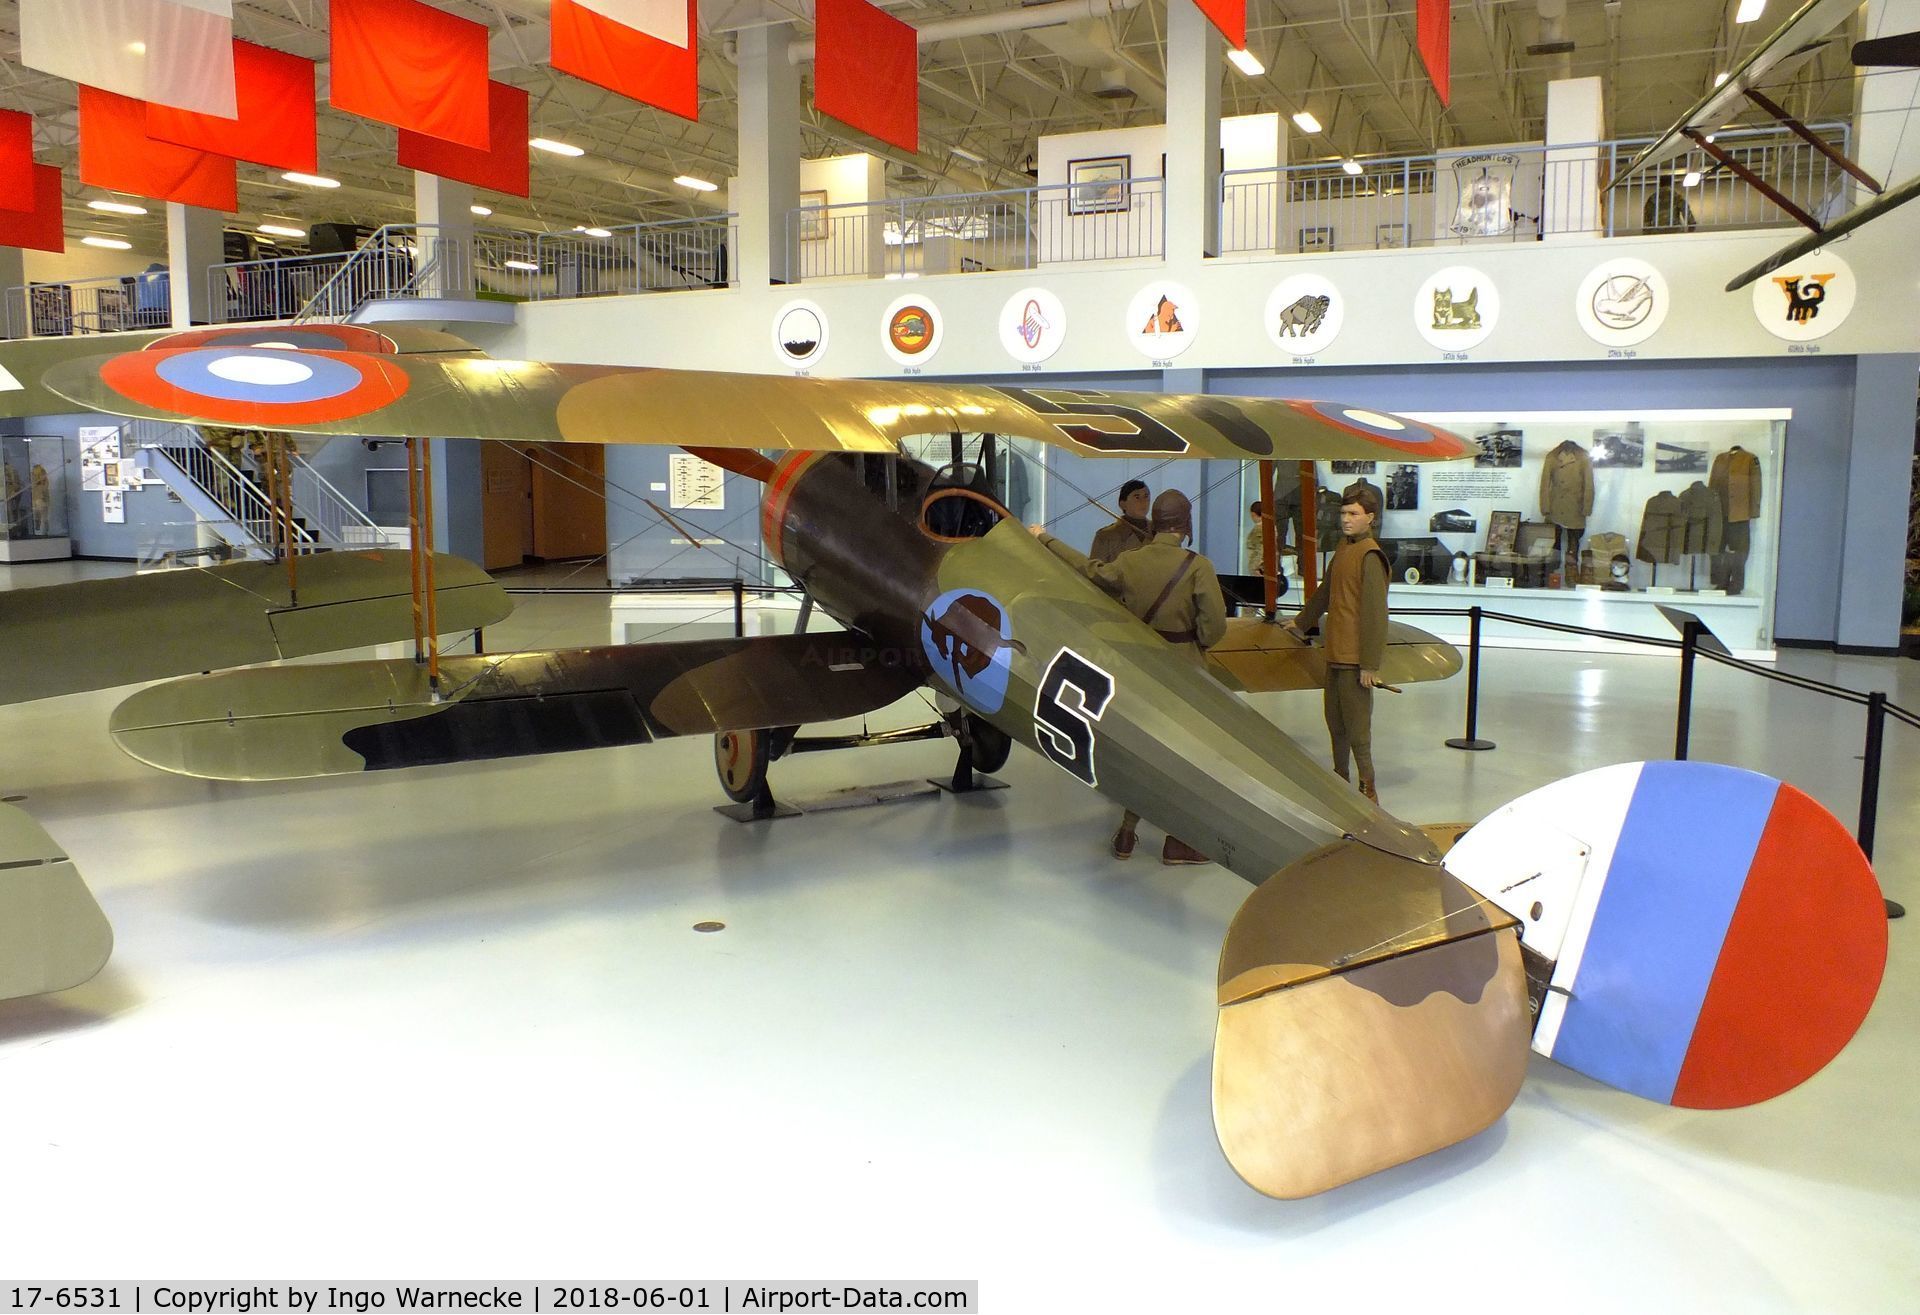 17-6531, 1918 Nieuport 28 C.1 C/N 6531, Nieuport 28 C.1 at the US Army Aviation Museum, Ft. Rucker